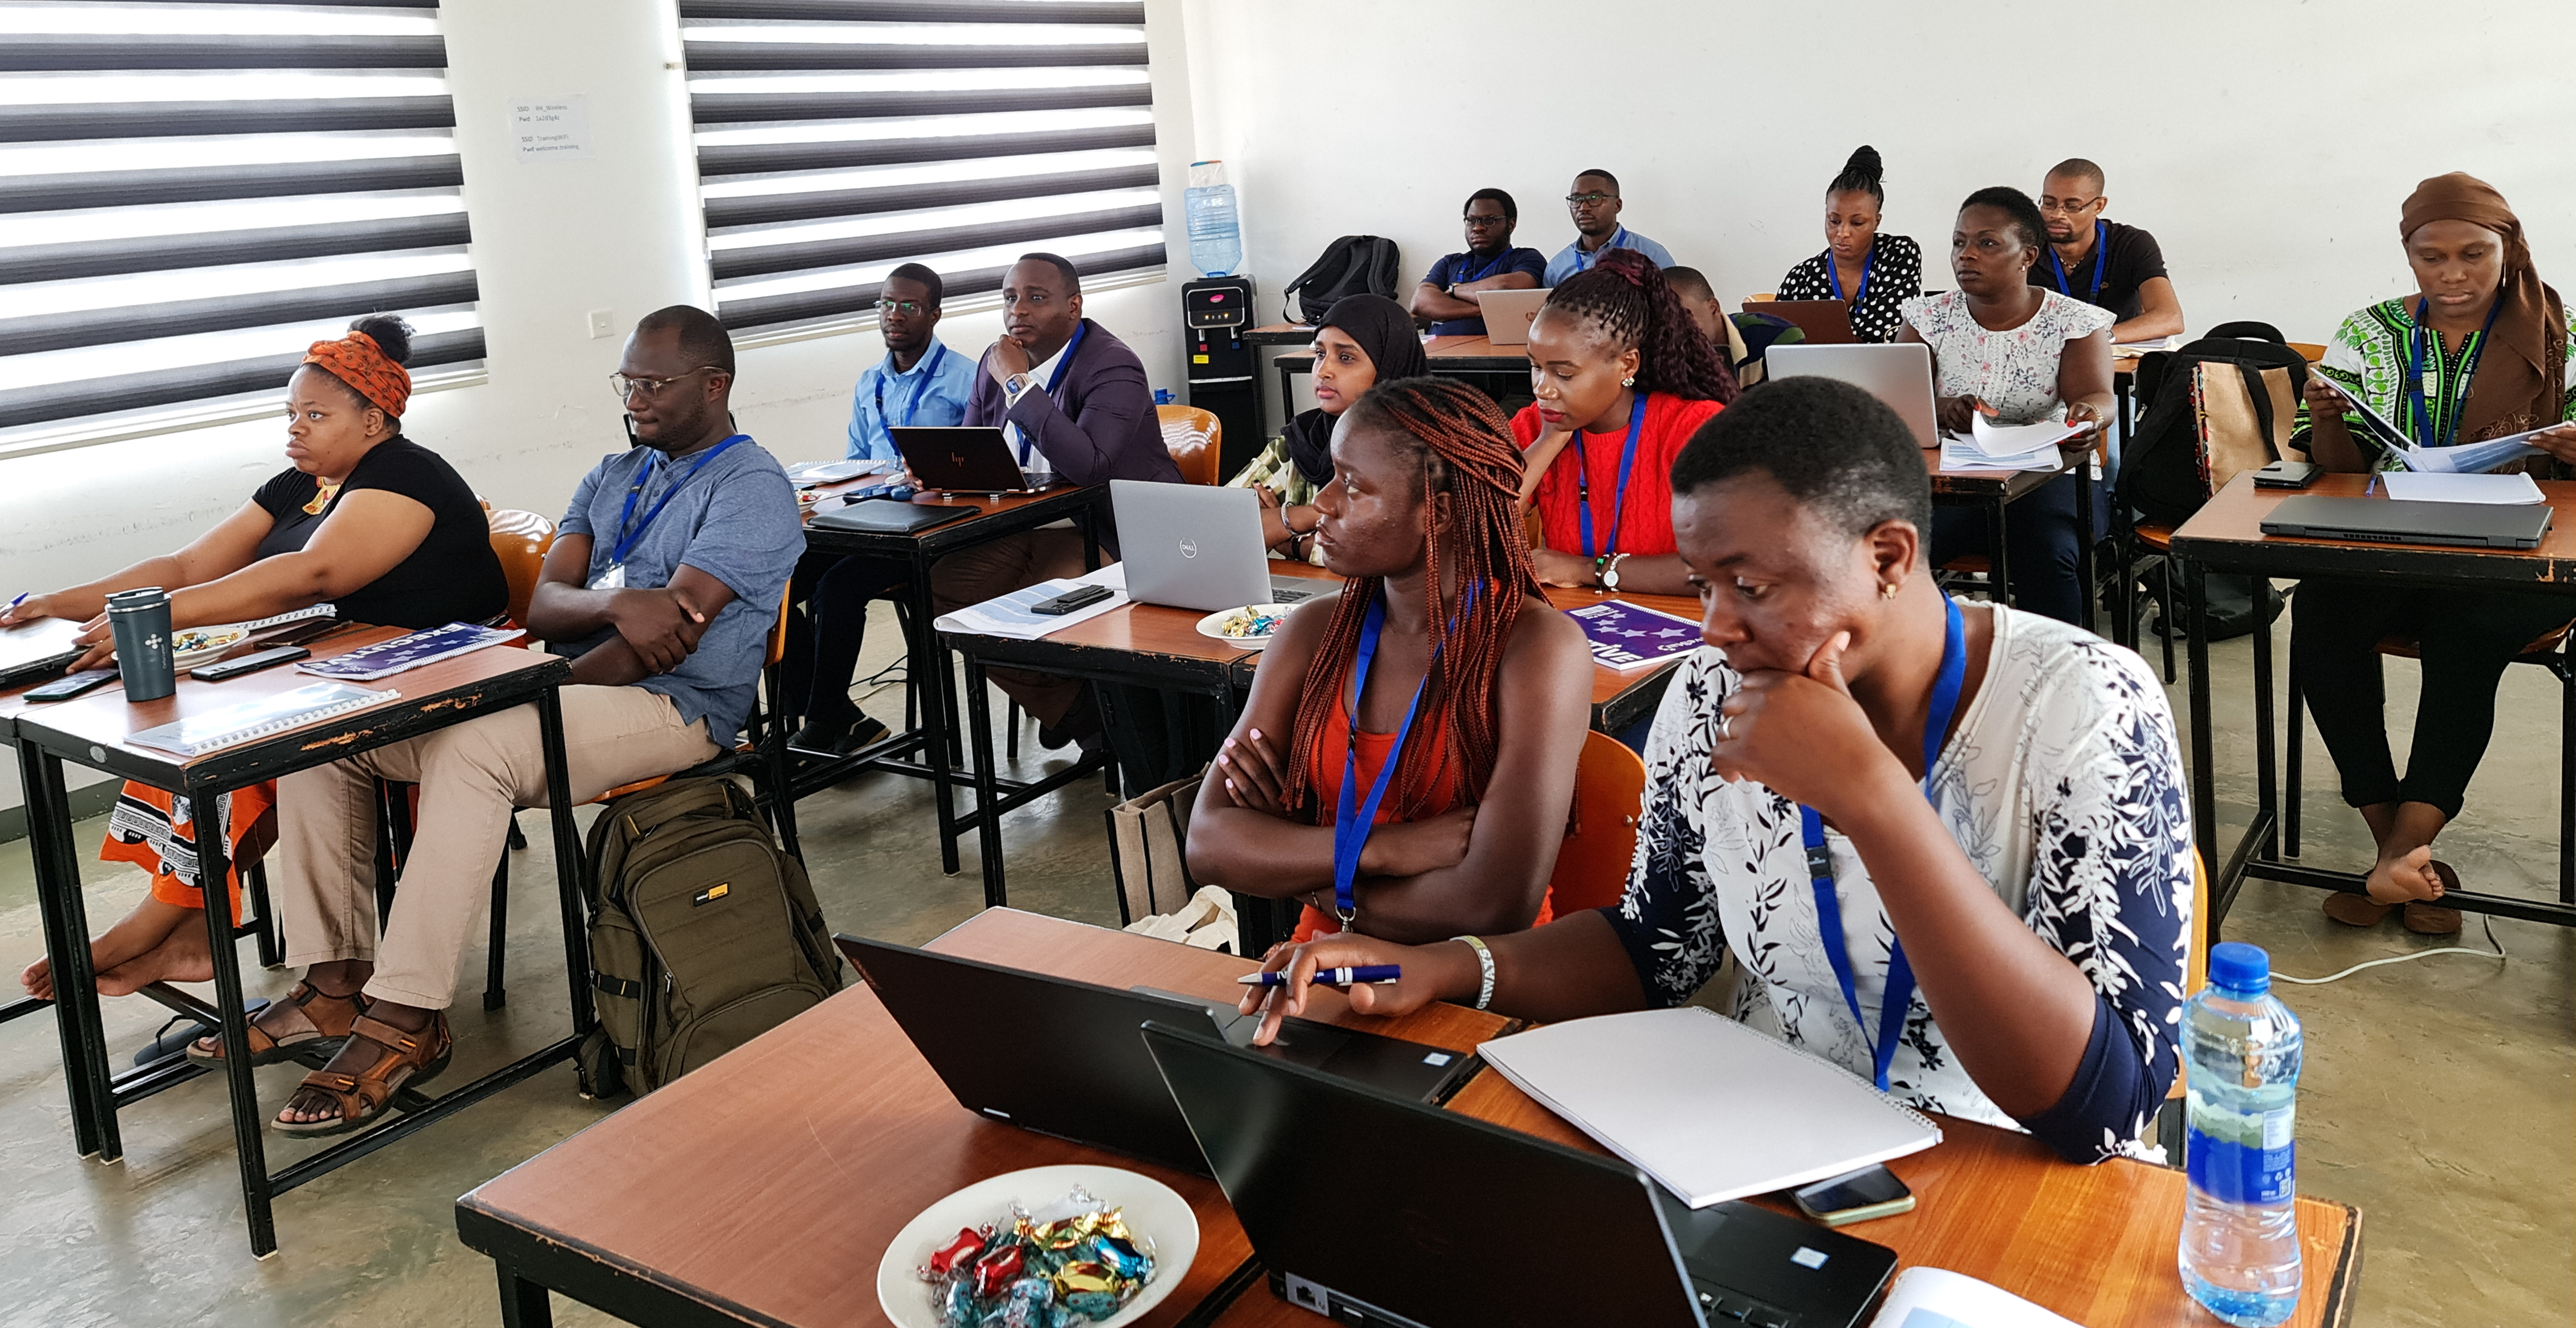 TRAINING:  International malaria course underway in Bagamoyo, Z’bar